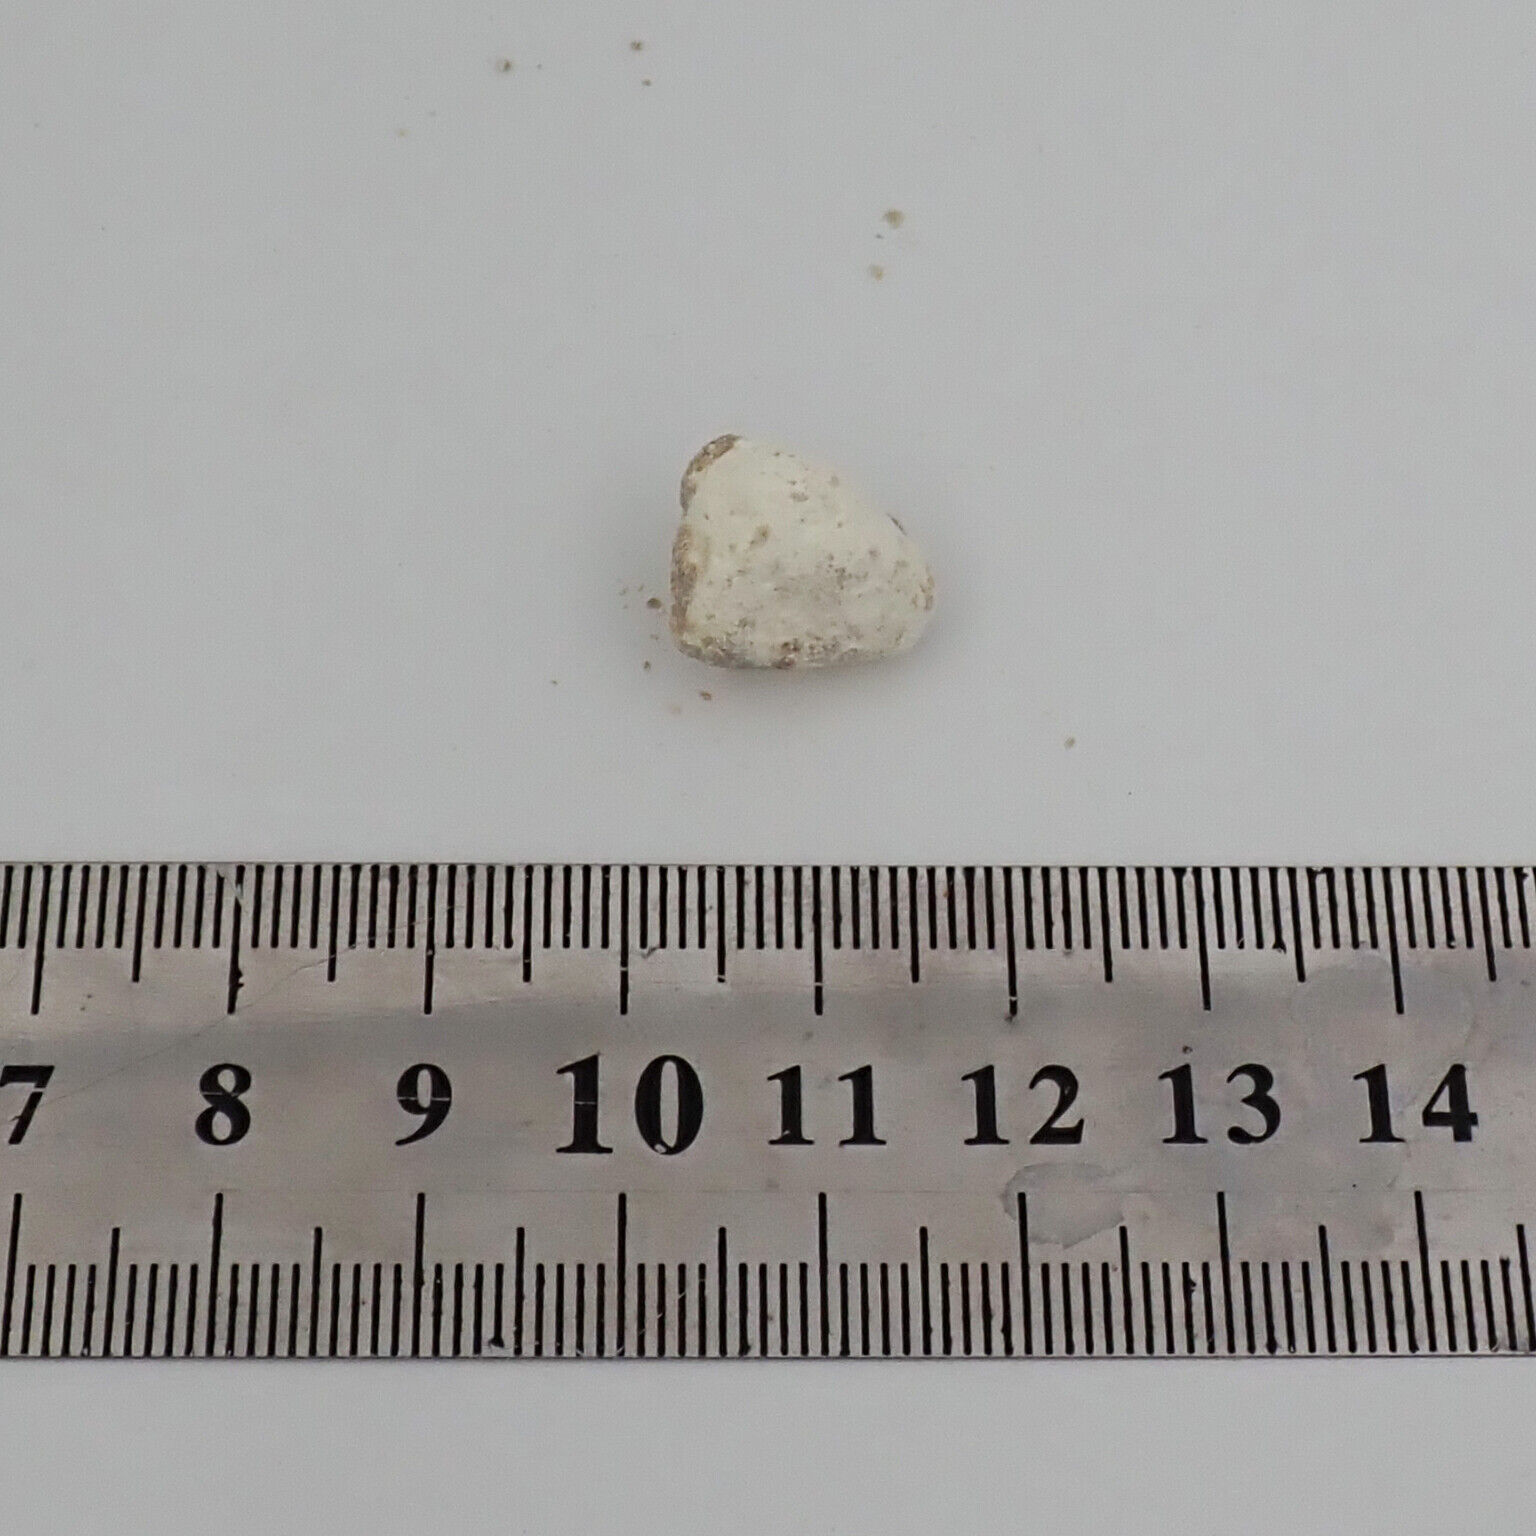 Brimstone Sulfur Balls From Sodom and Gomorrah City Biblical 10mm - 92mm